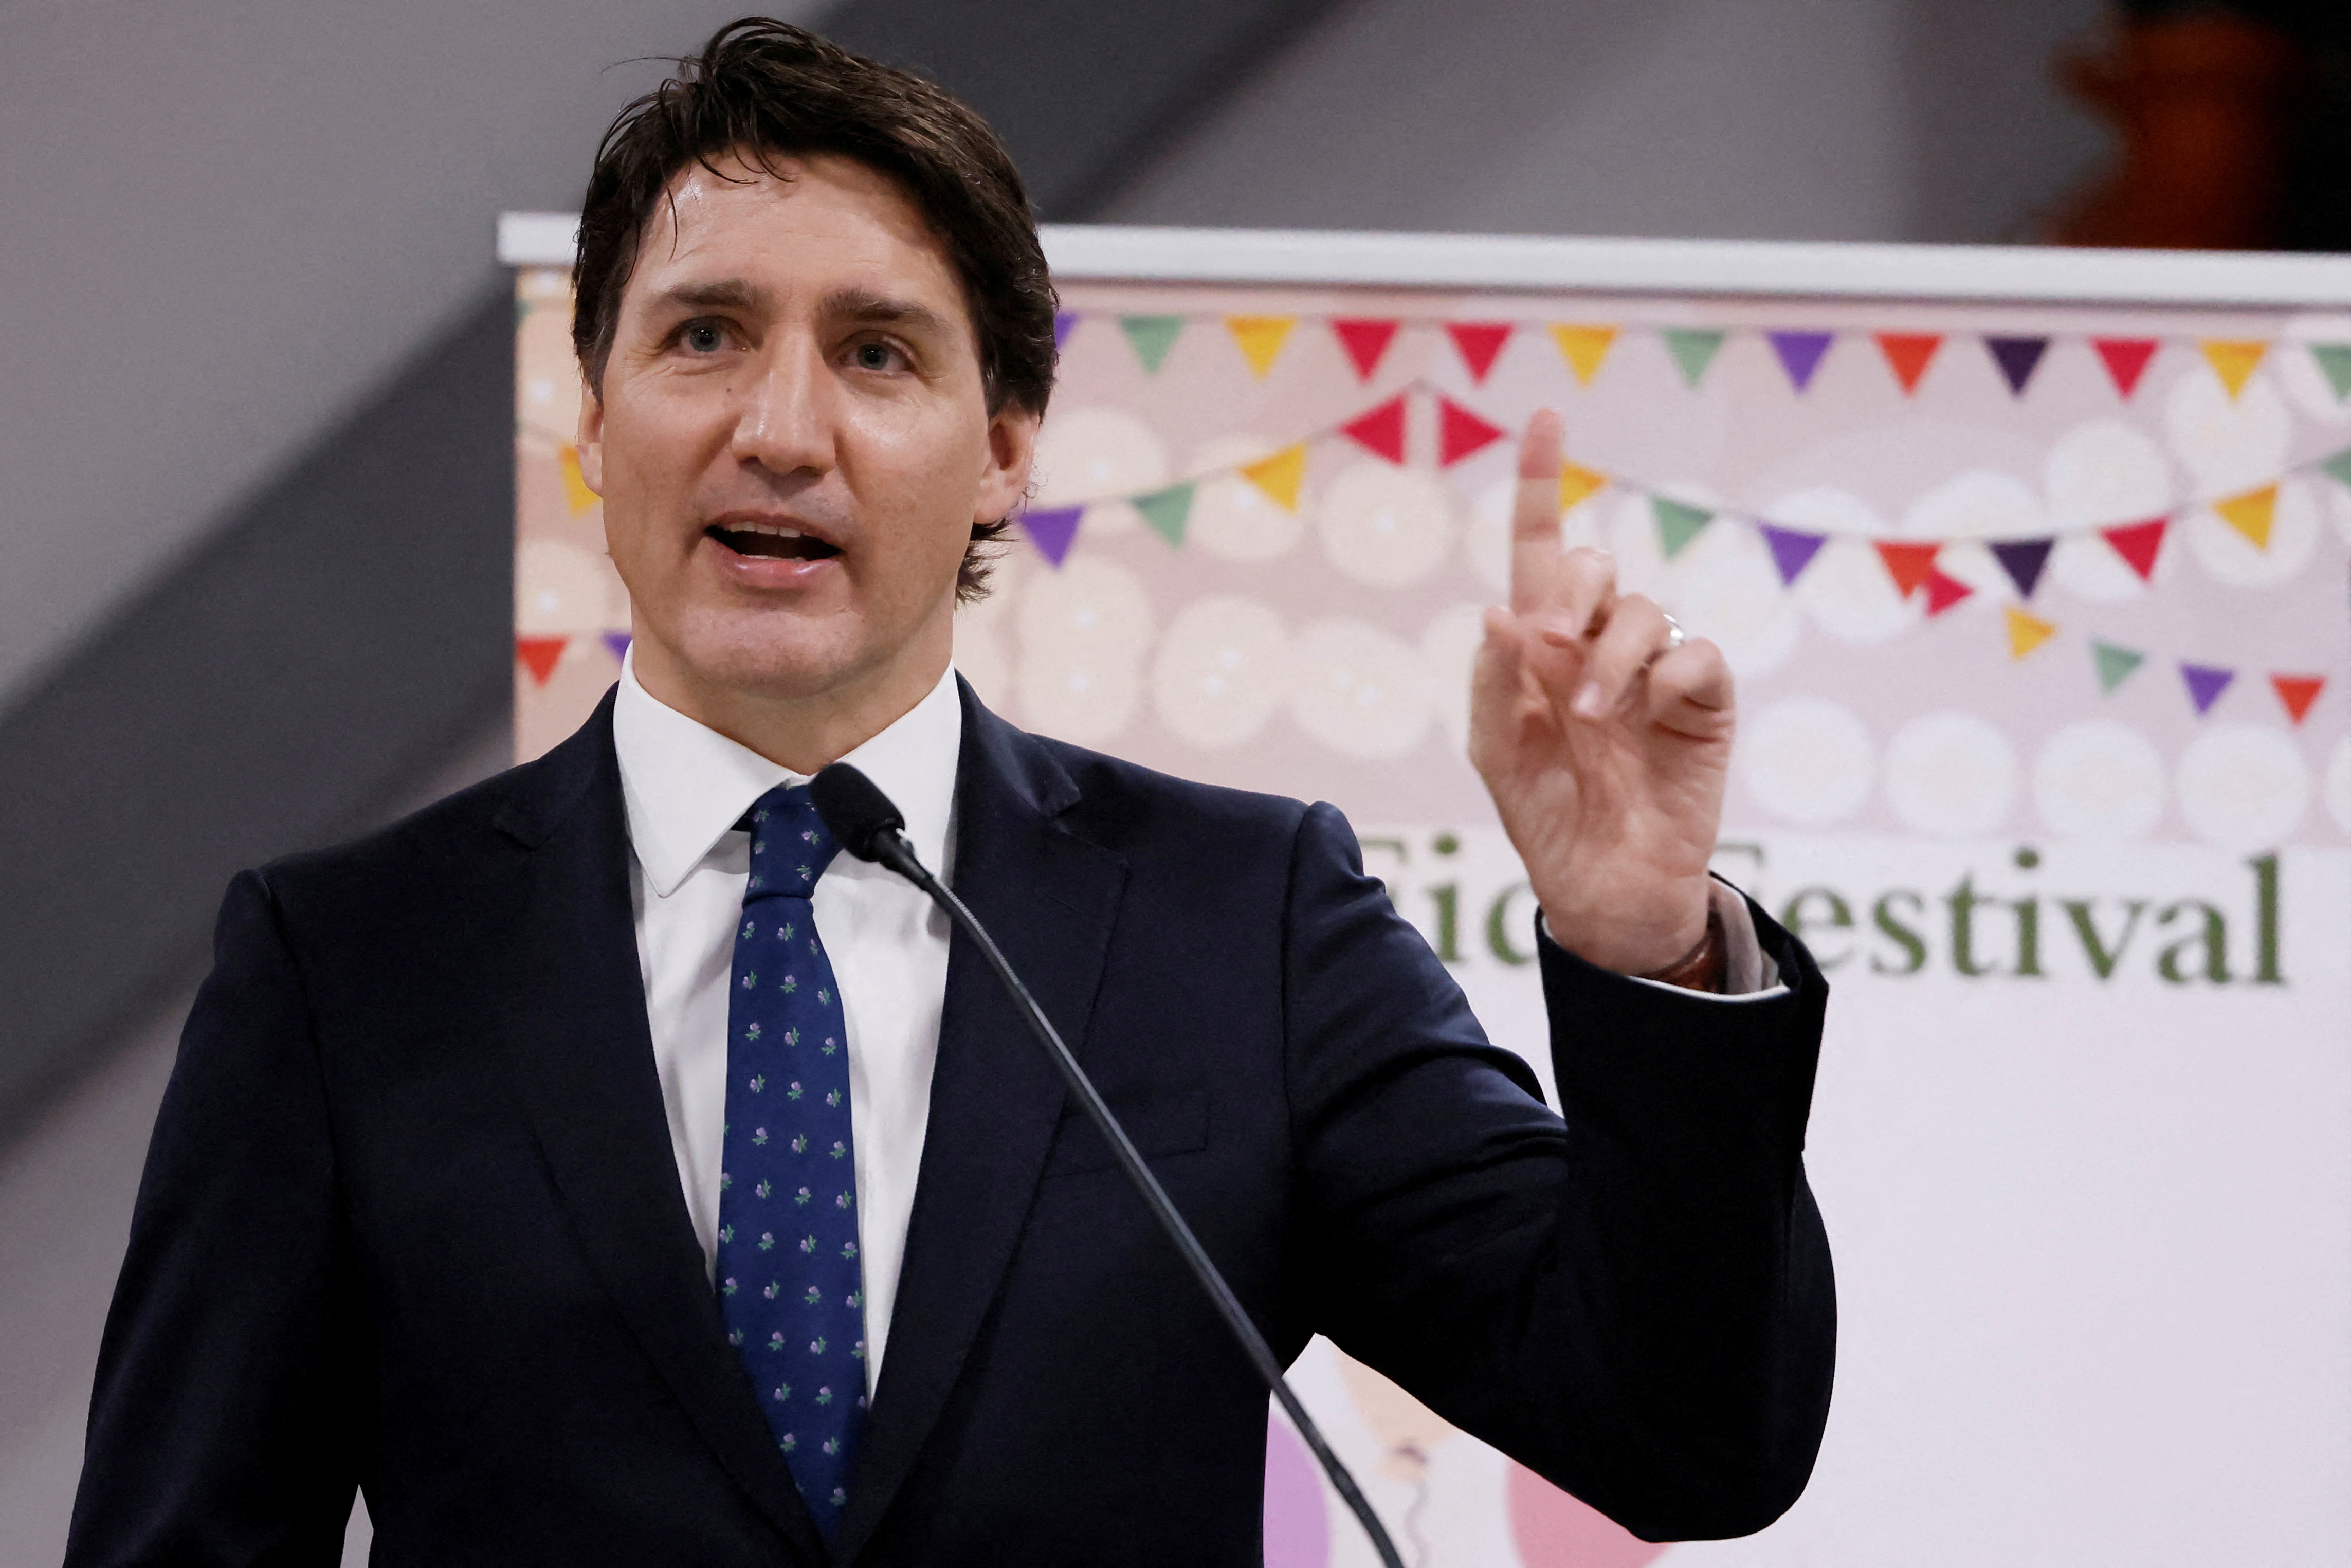 File photo: Canadian Prime Minister Justin Trudeau